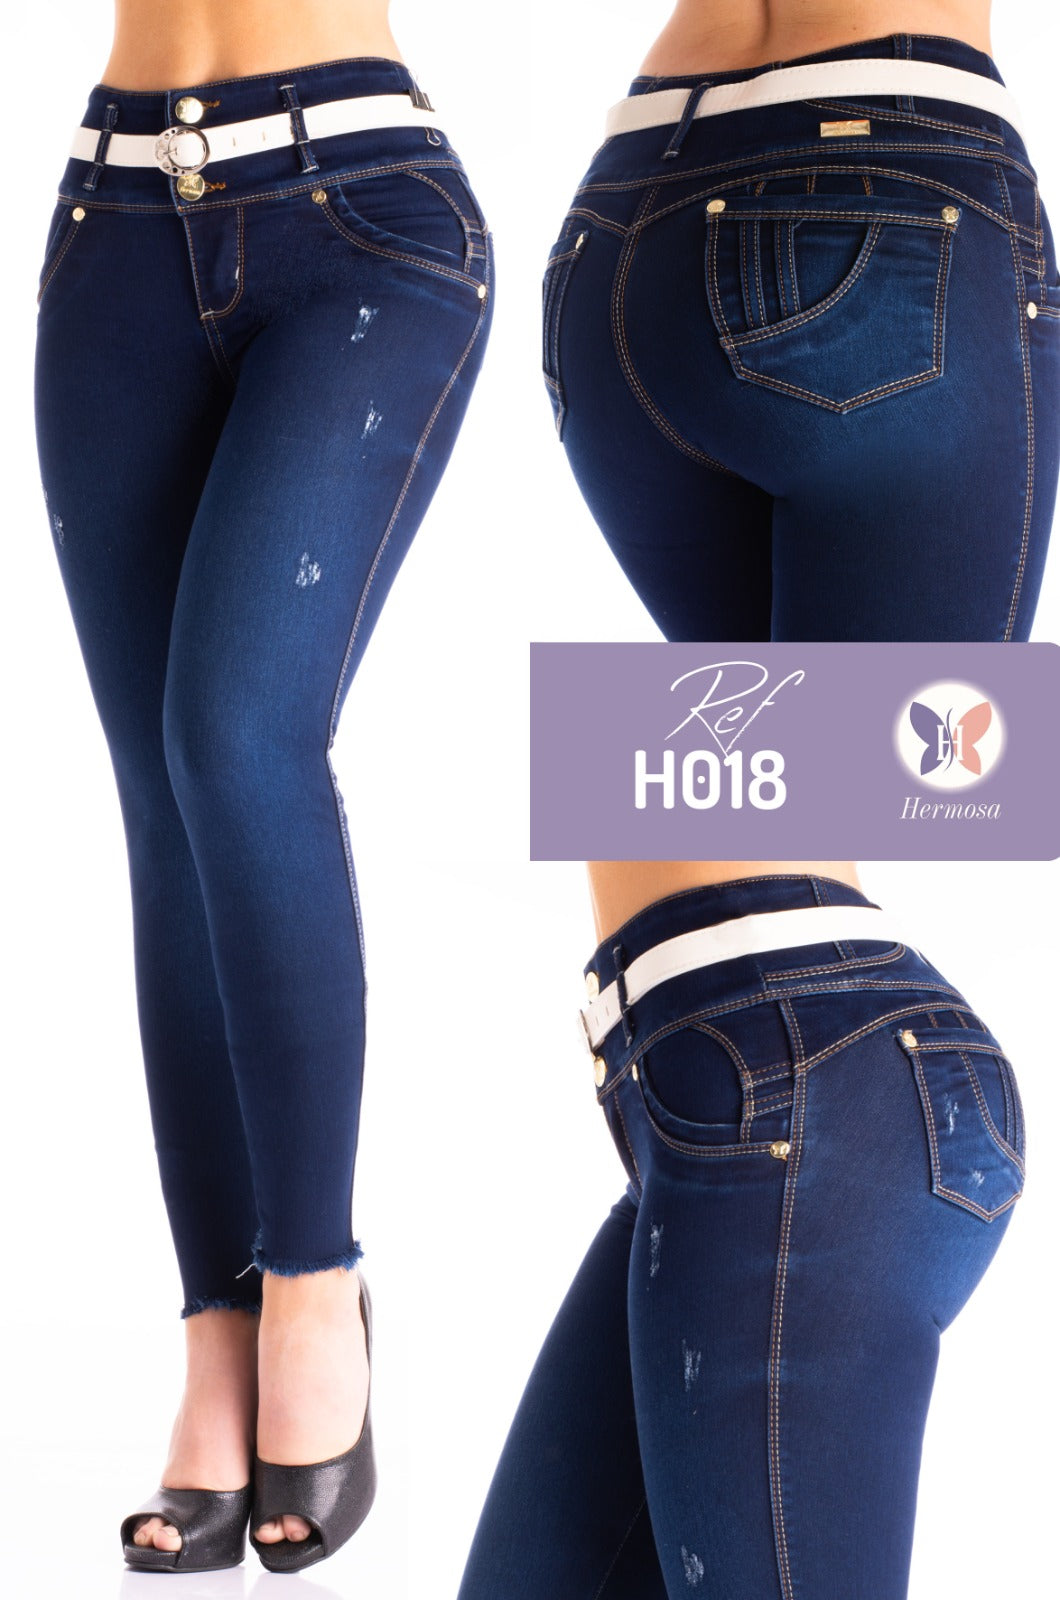 Dark Blue Push Up Jeans with White Belt - H018